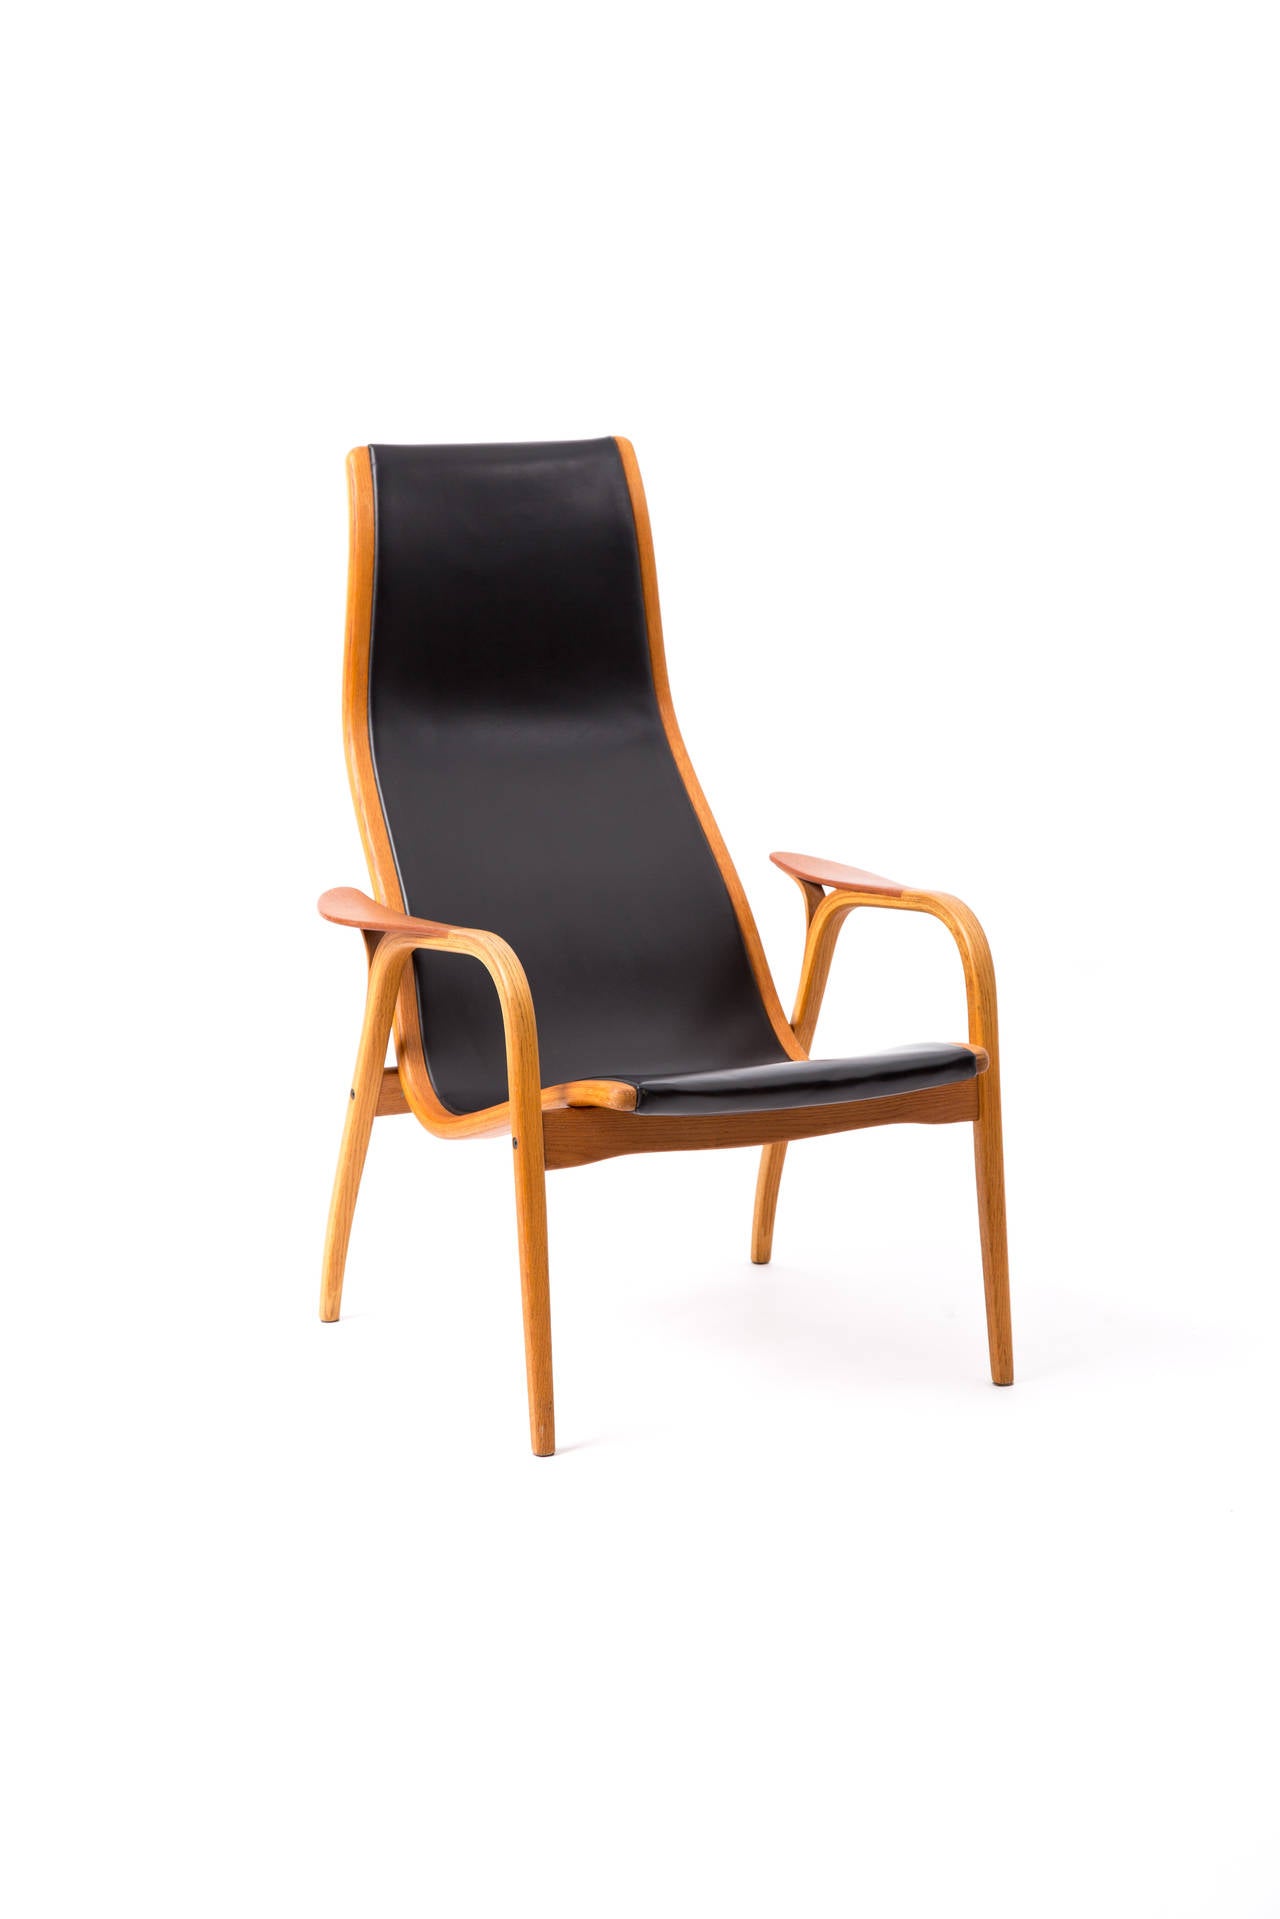 swedish lamino chair